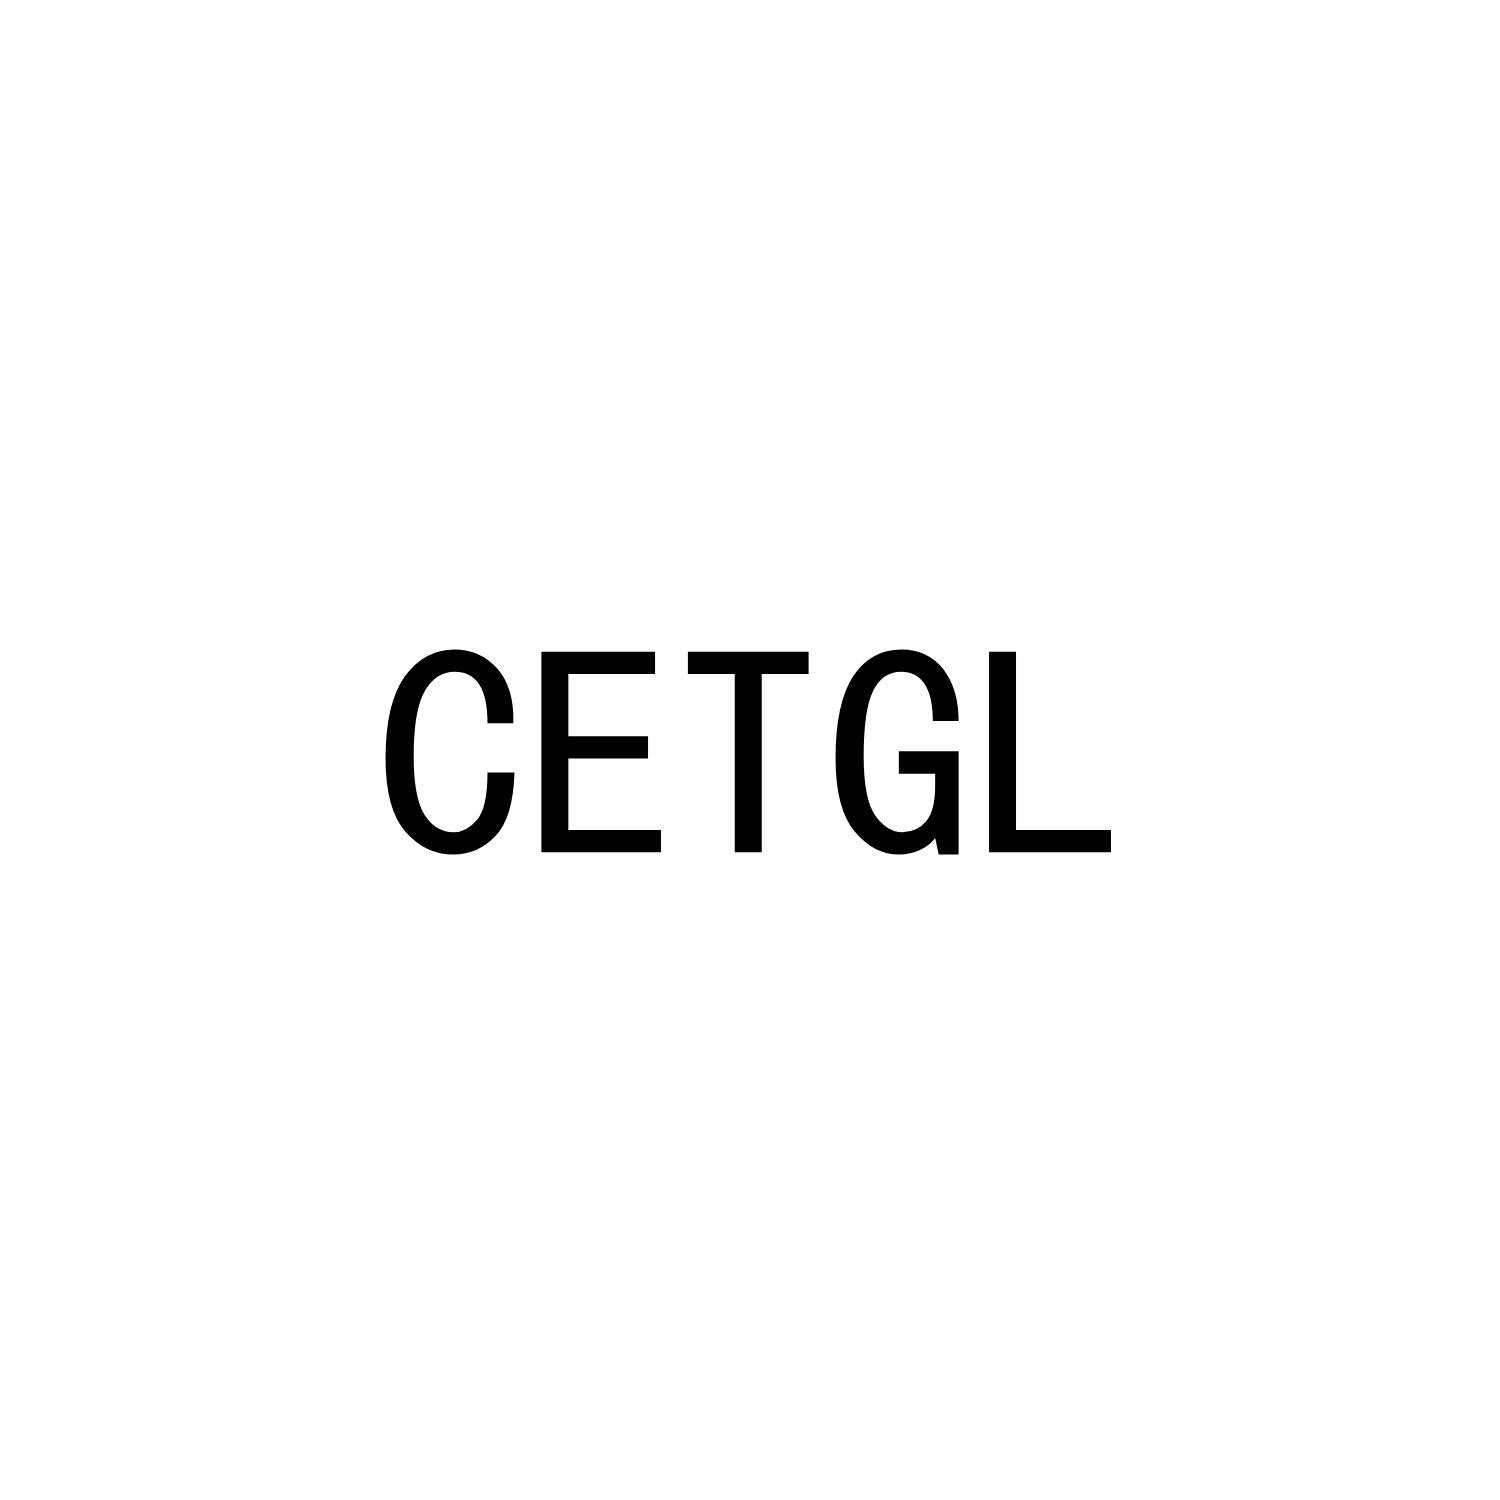 CETGL商标转让